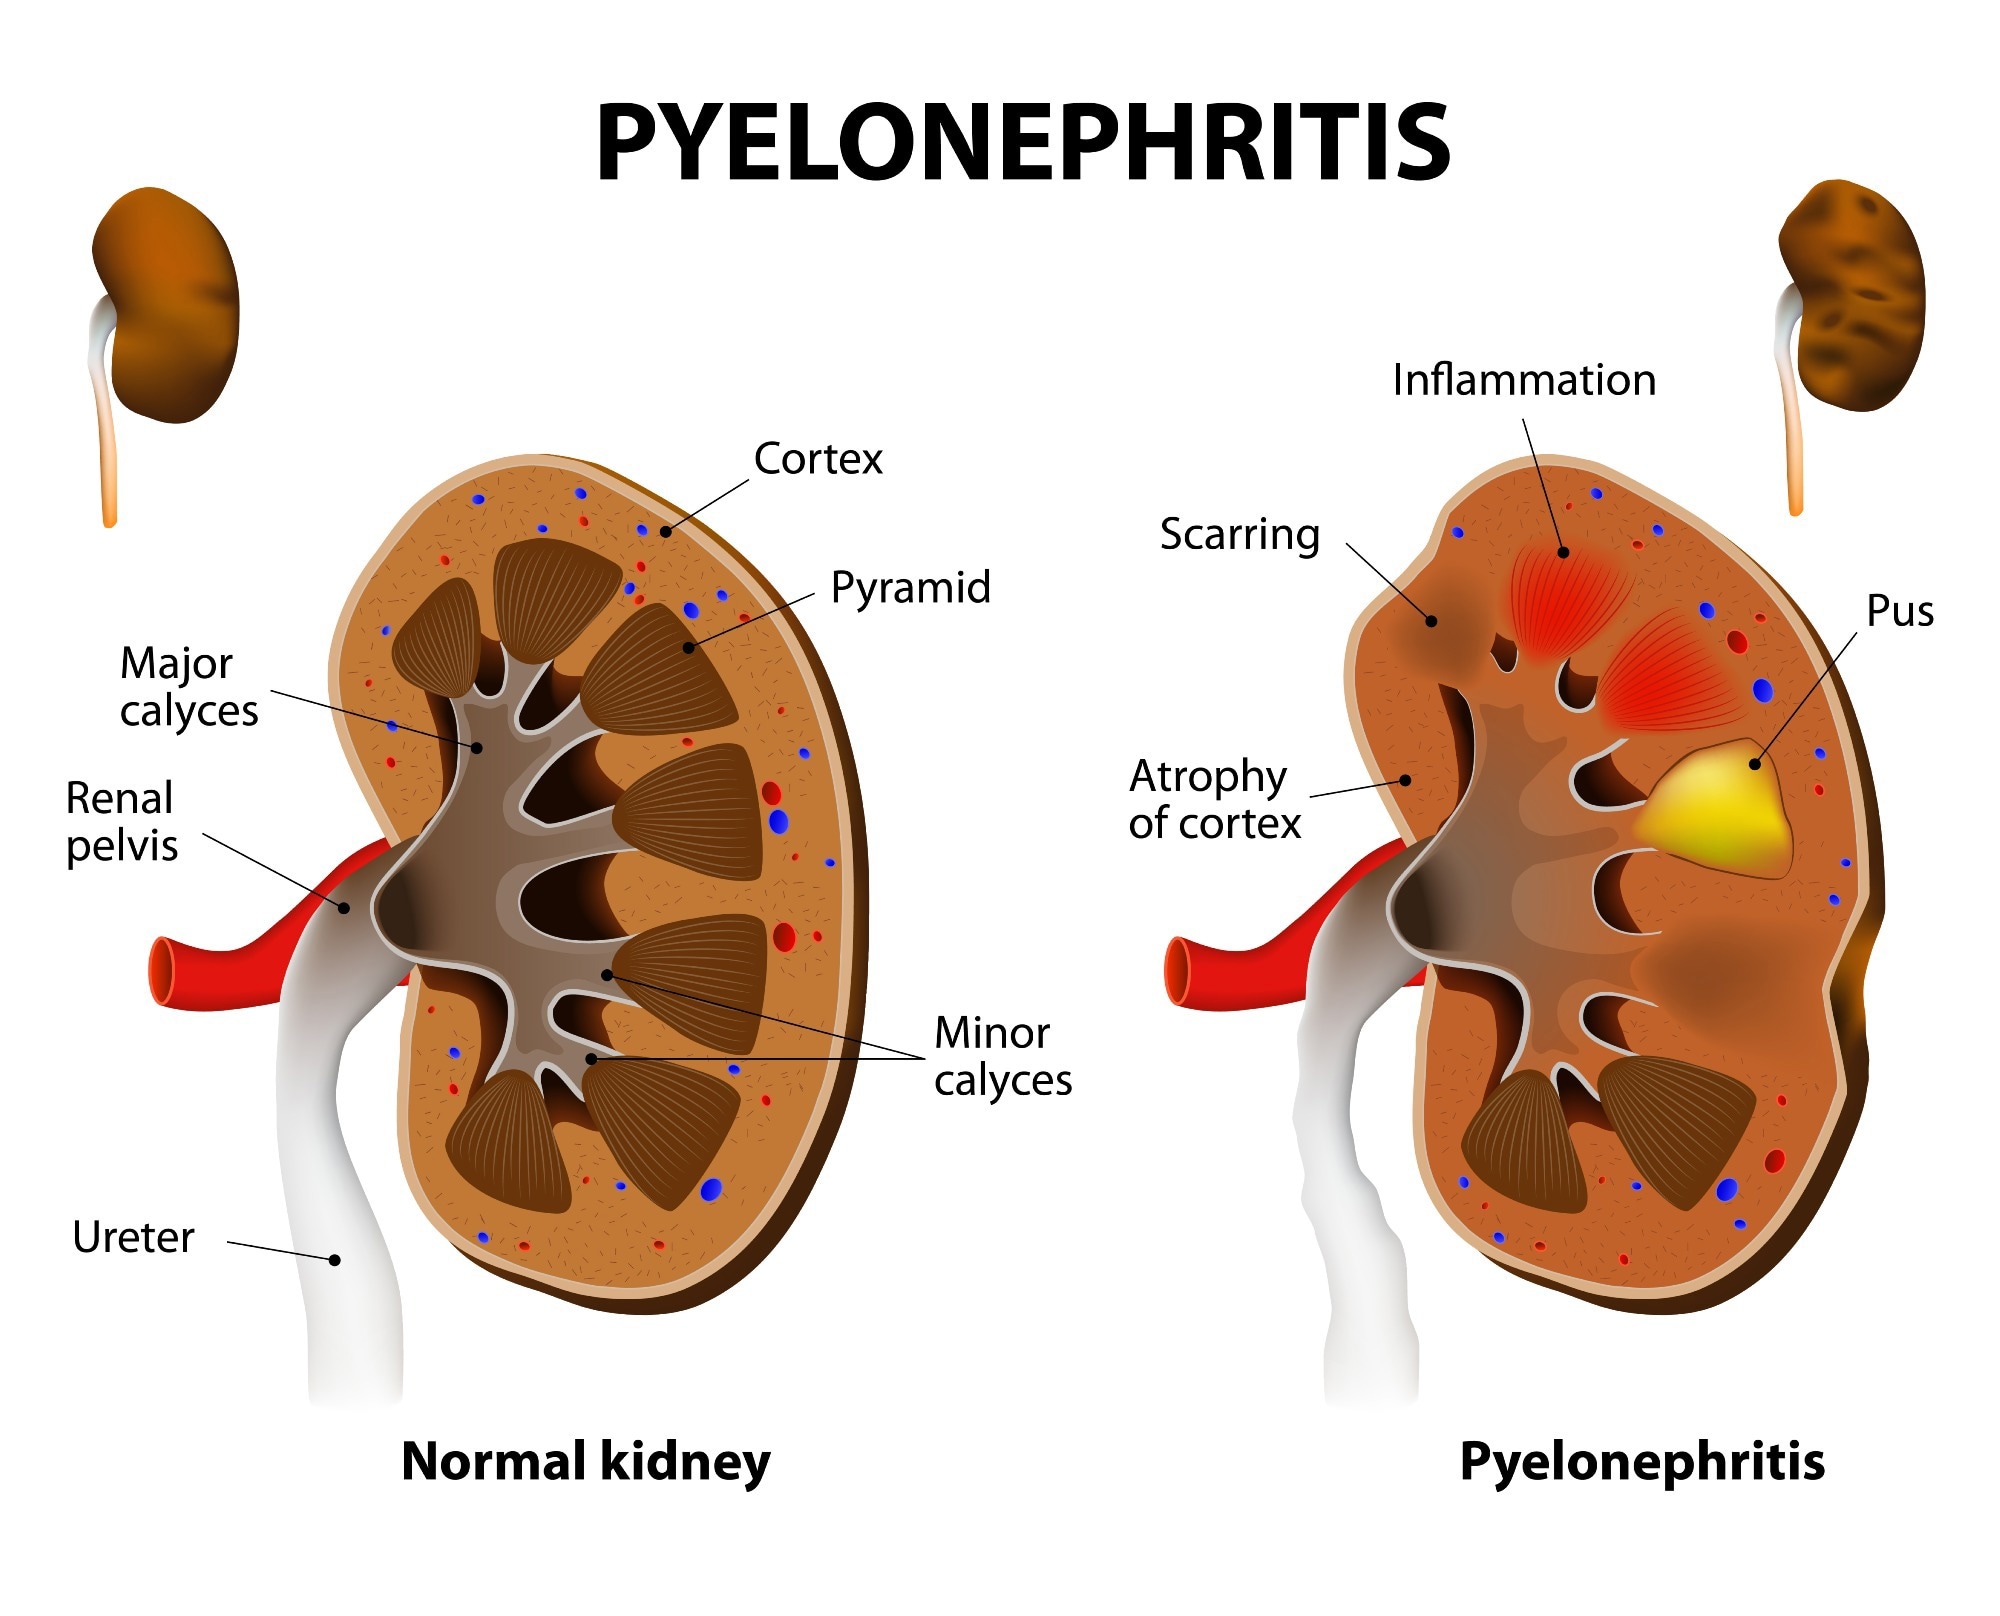 Pyelonephritis. Image Credit: Designua / Shutterstock